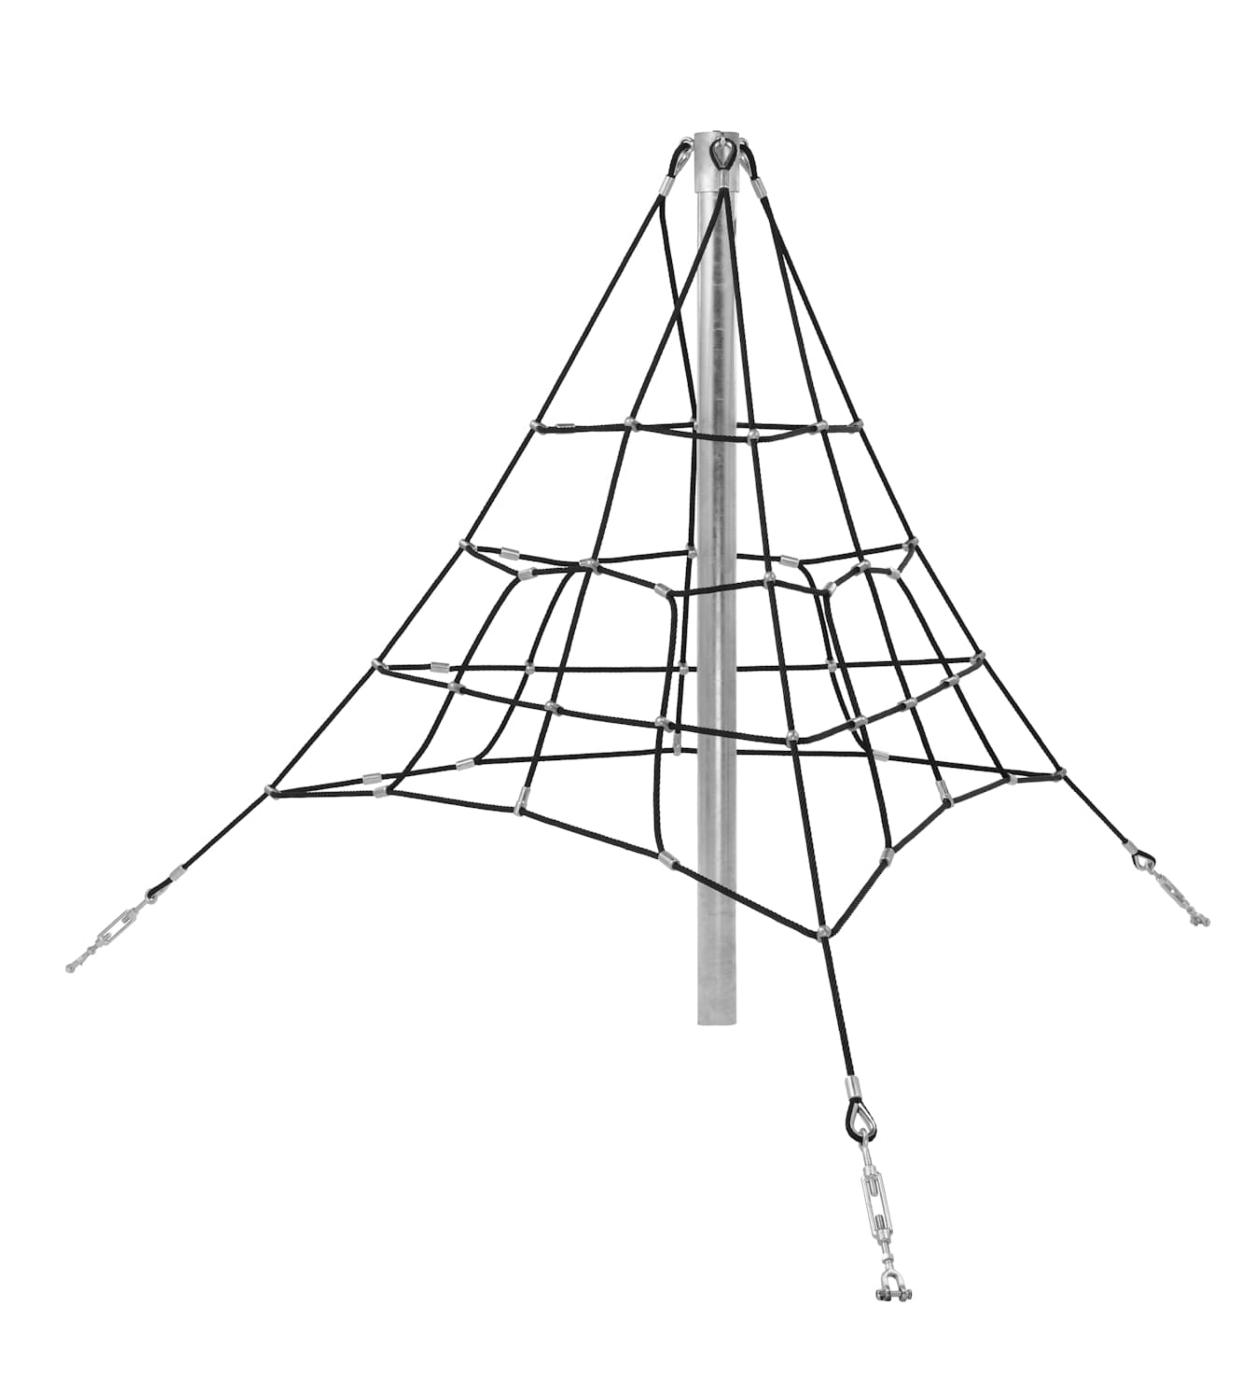 Pirâmide de corda de 3 lados com 200 cm de altura MEROE